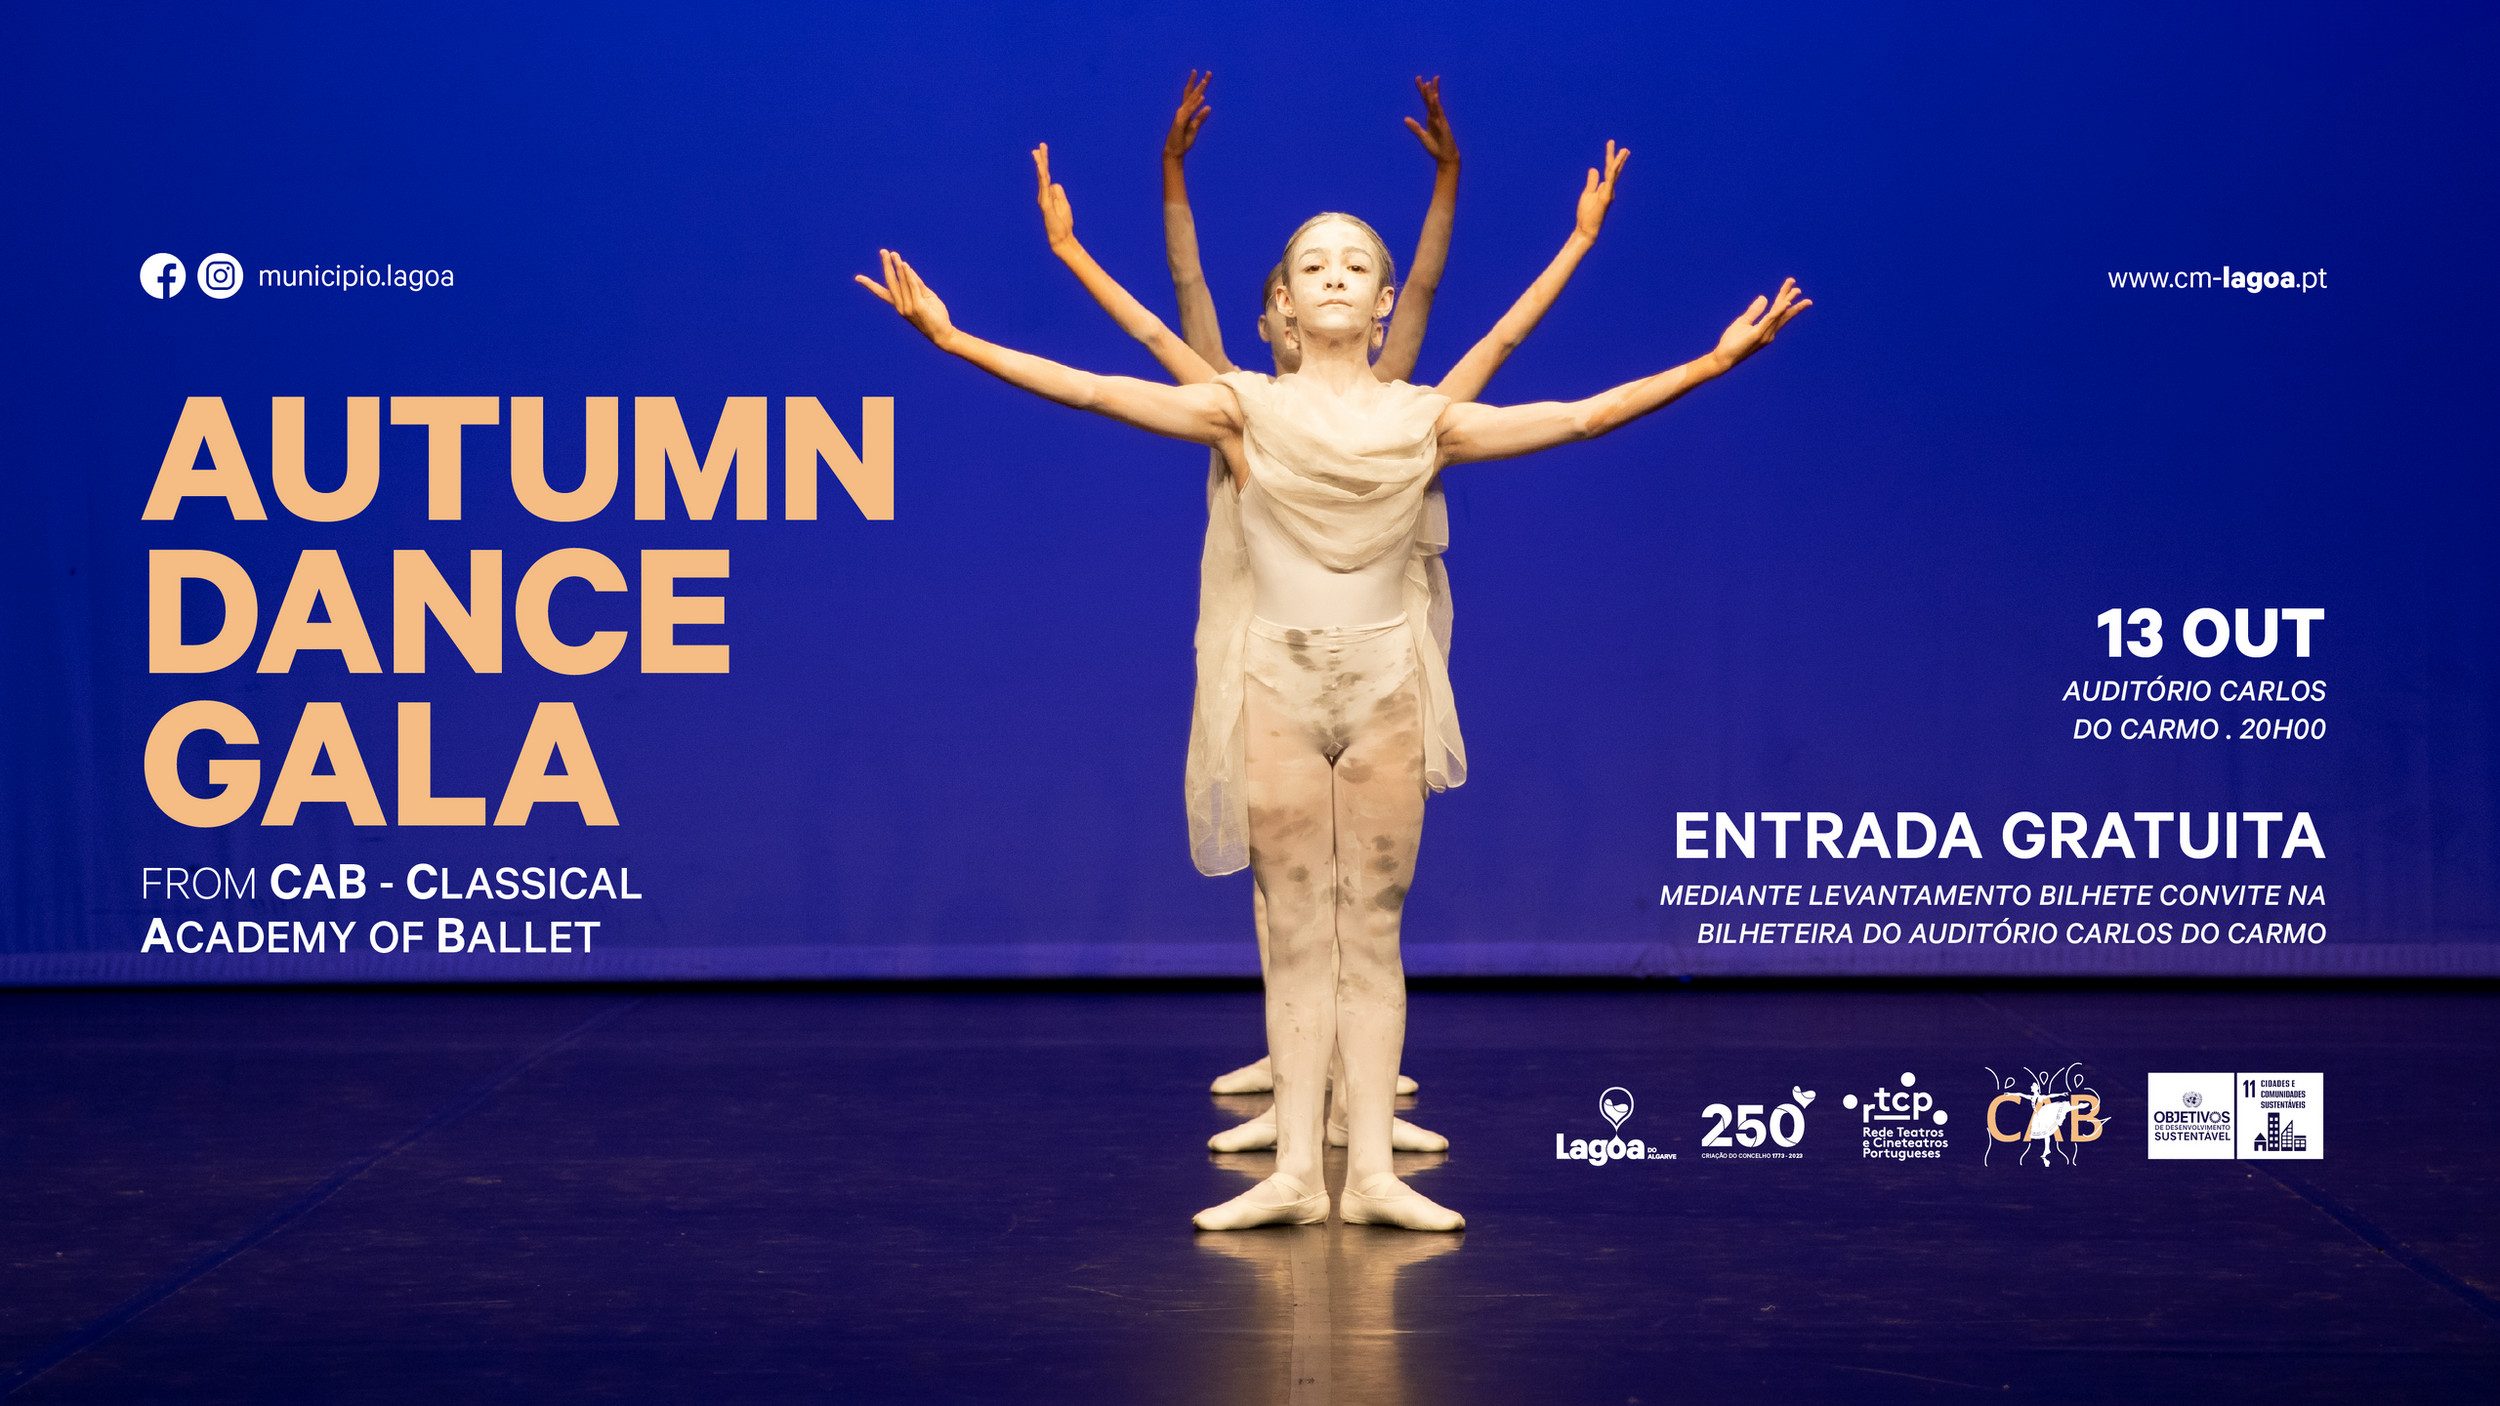 "AUTUMN DANCE GALA" | CAB - Classical Academy of Ballet